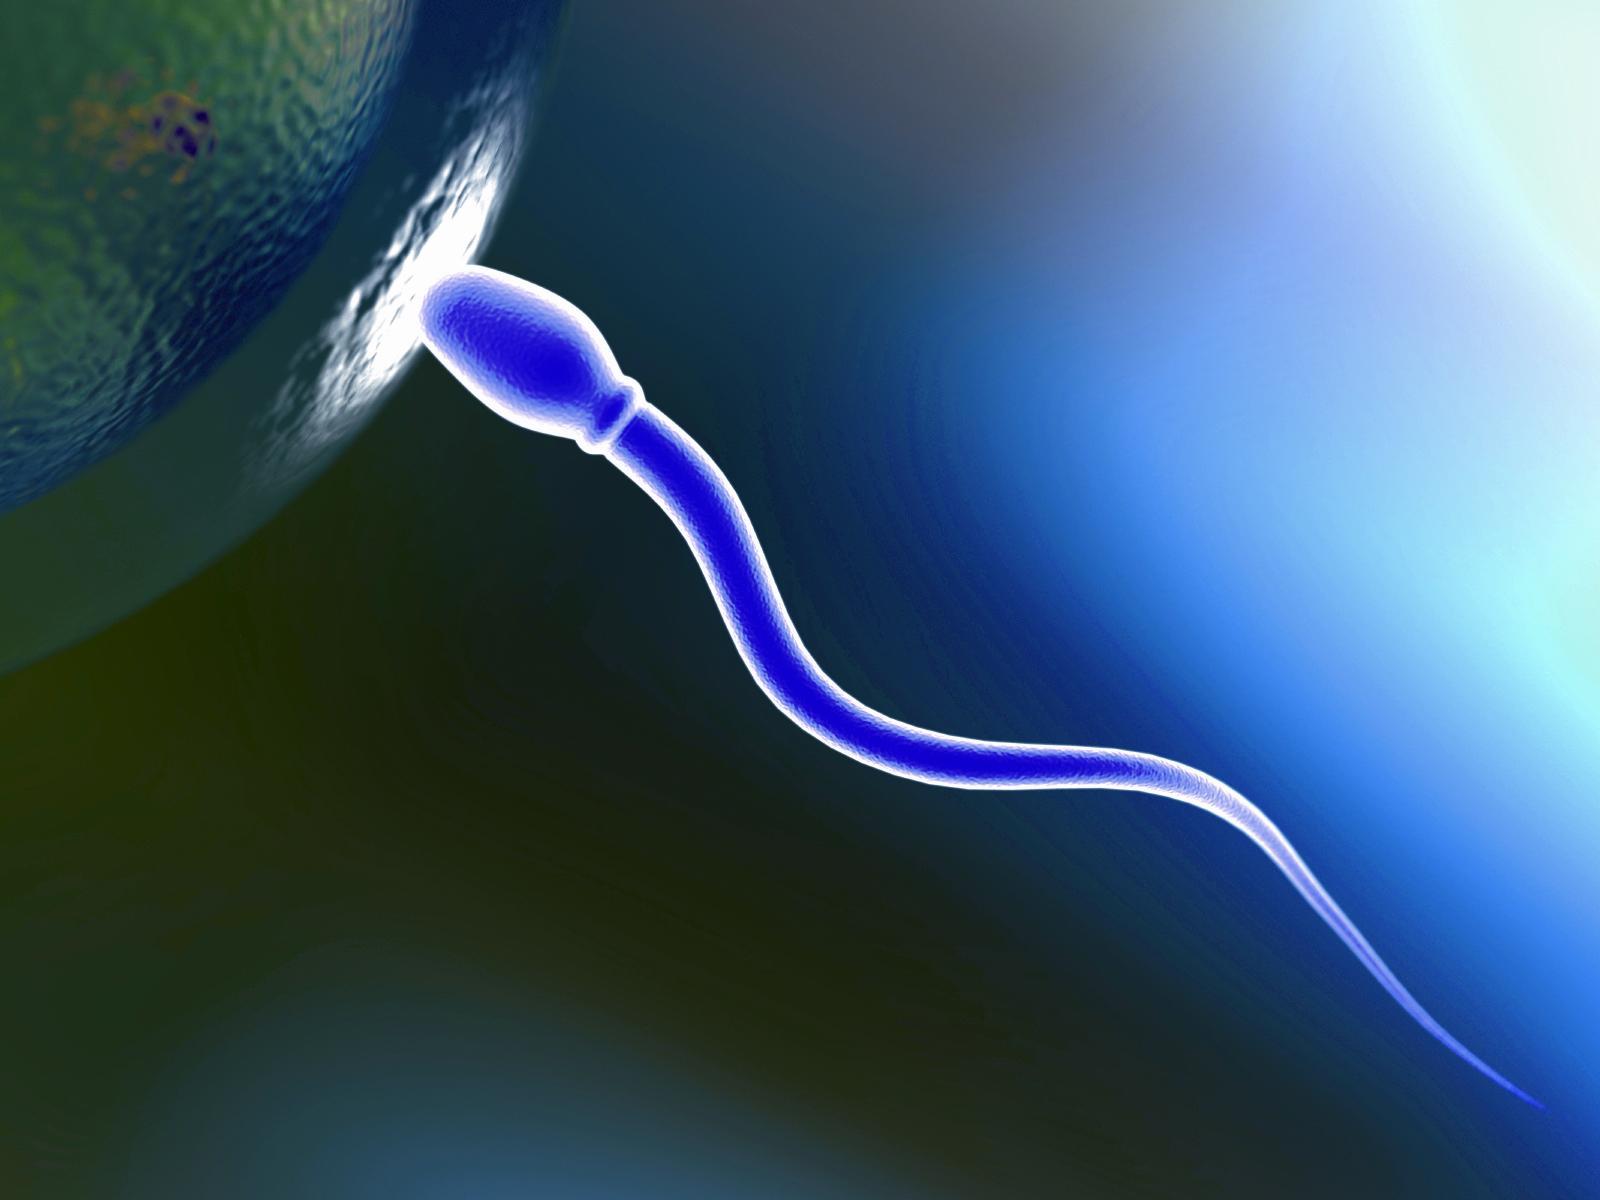 Low sperm count not just a problem for fertility